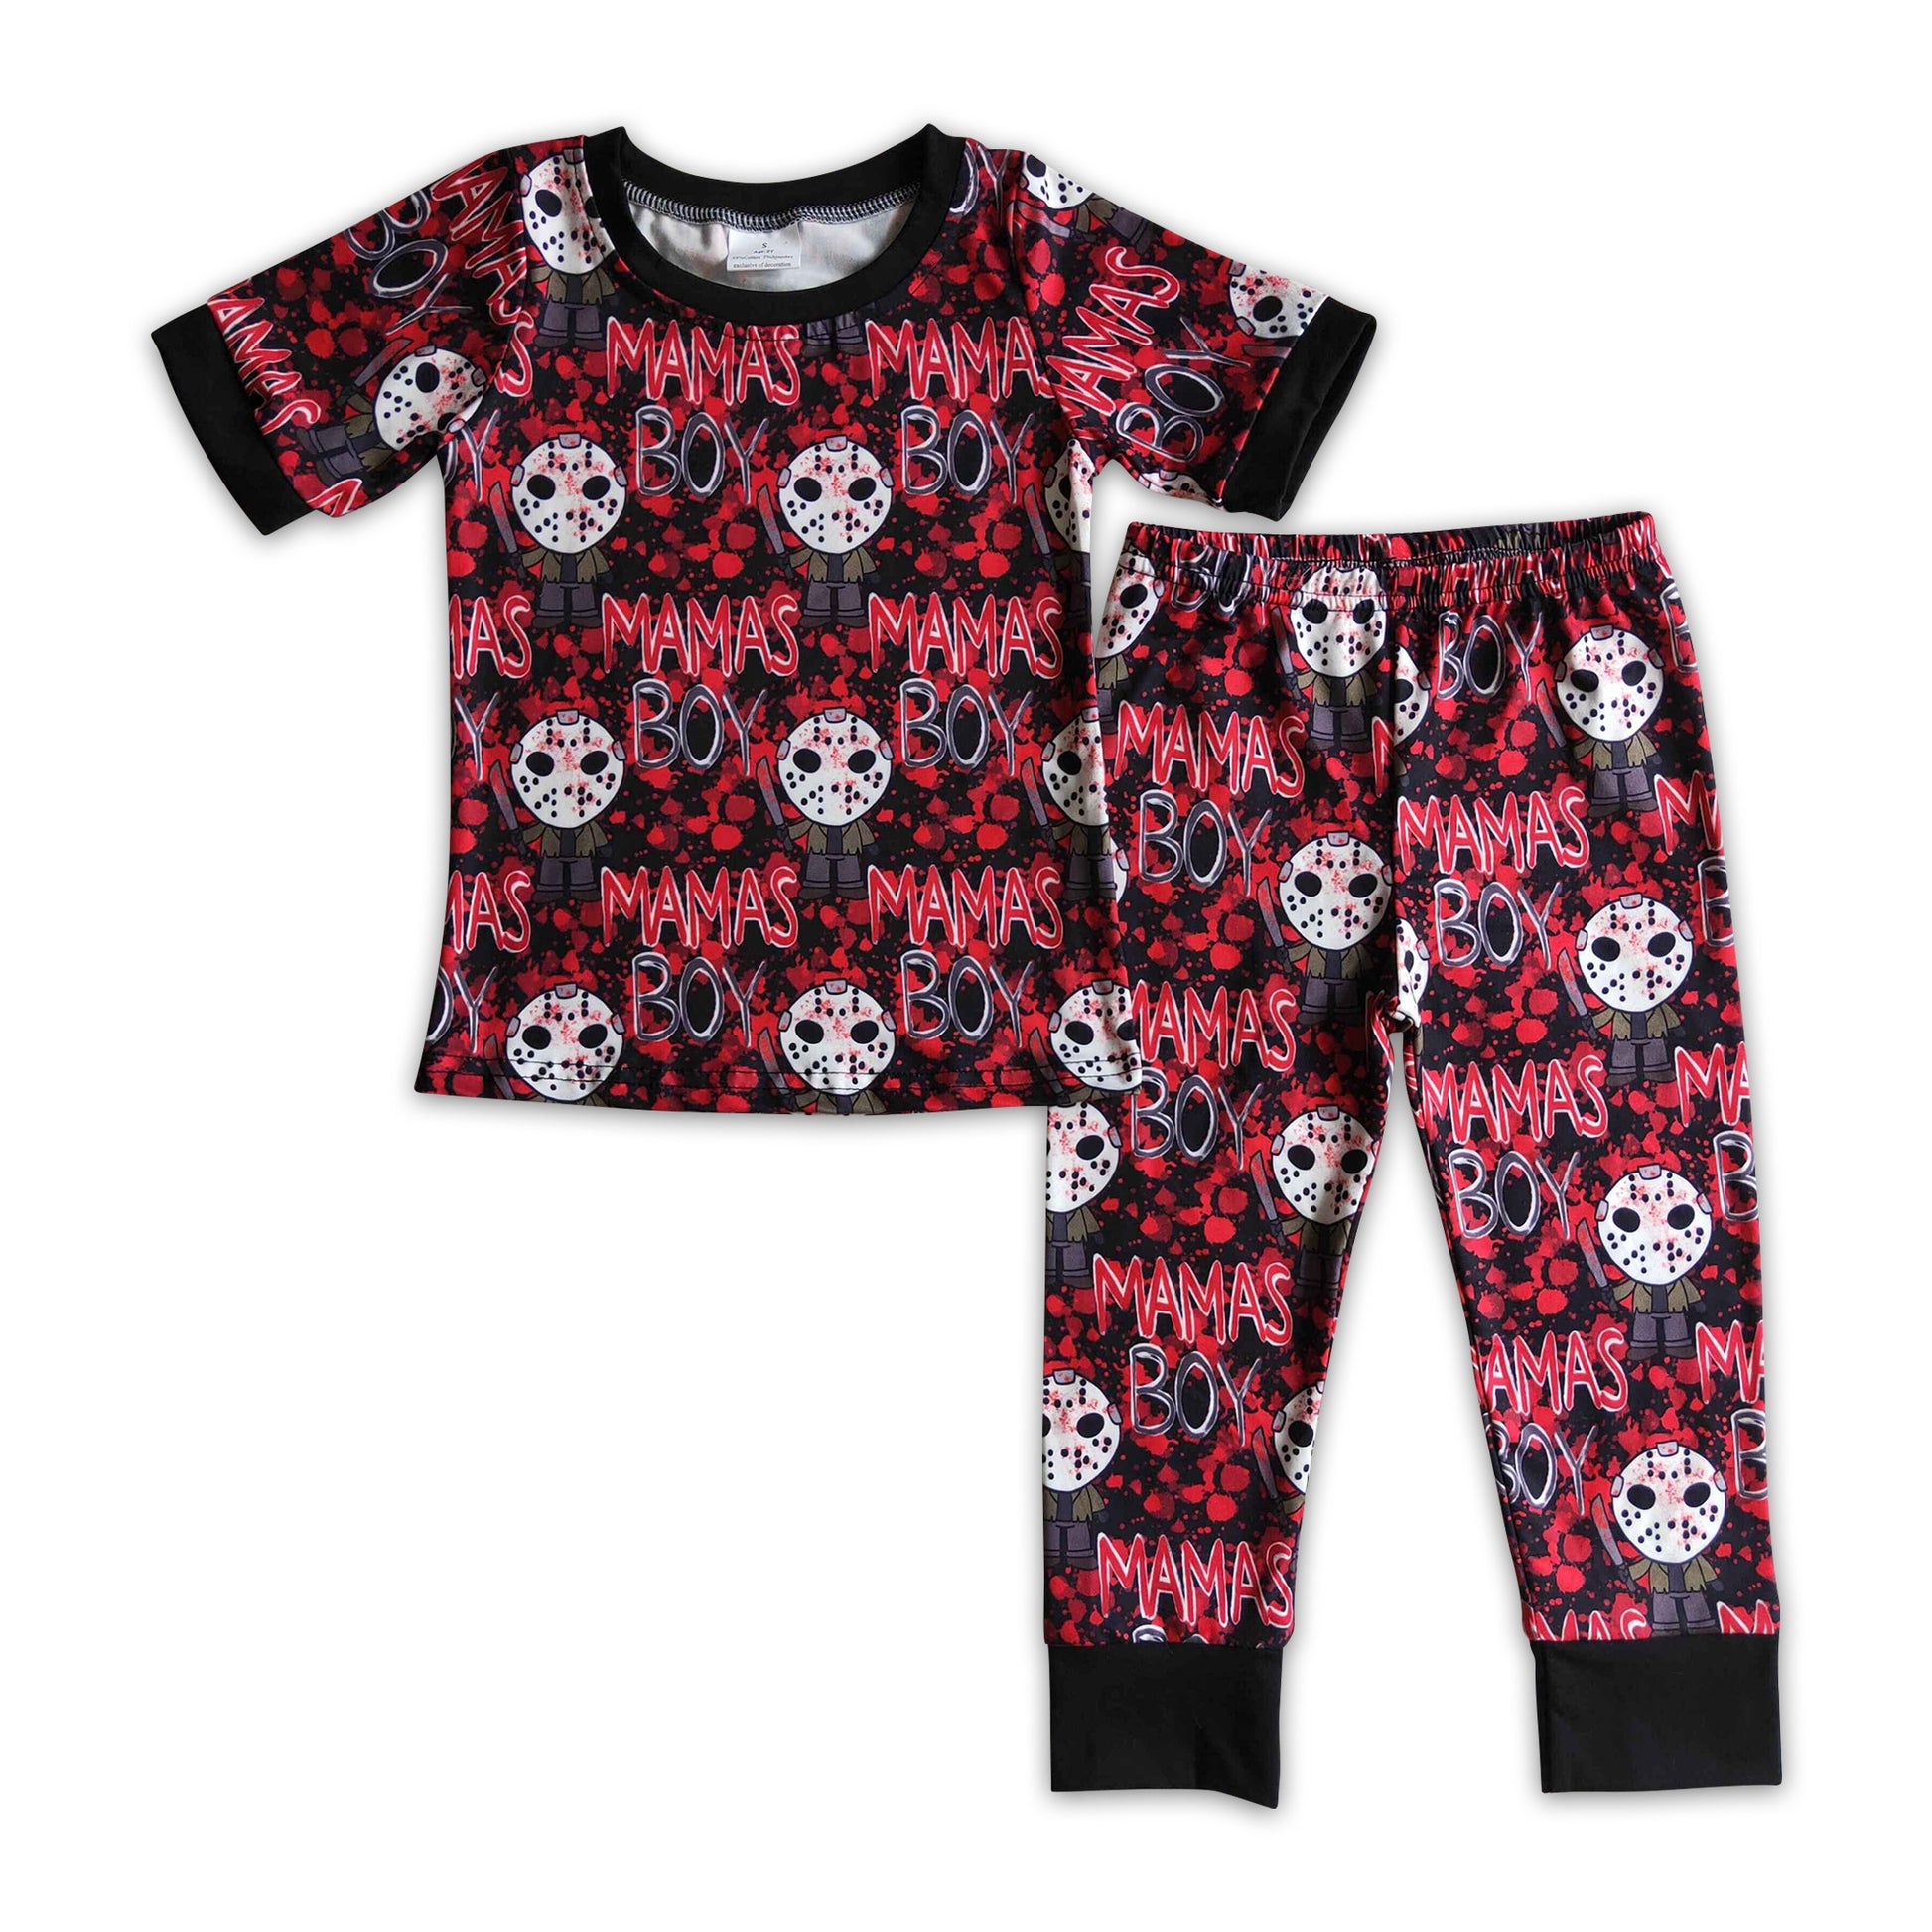 Mama's boy short sleeves shirt pants boy Halloween pajamas – Yawoo Garments